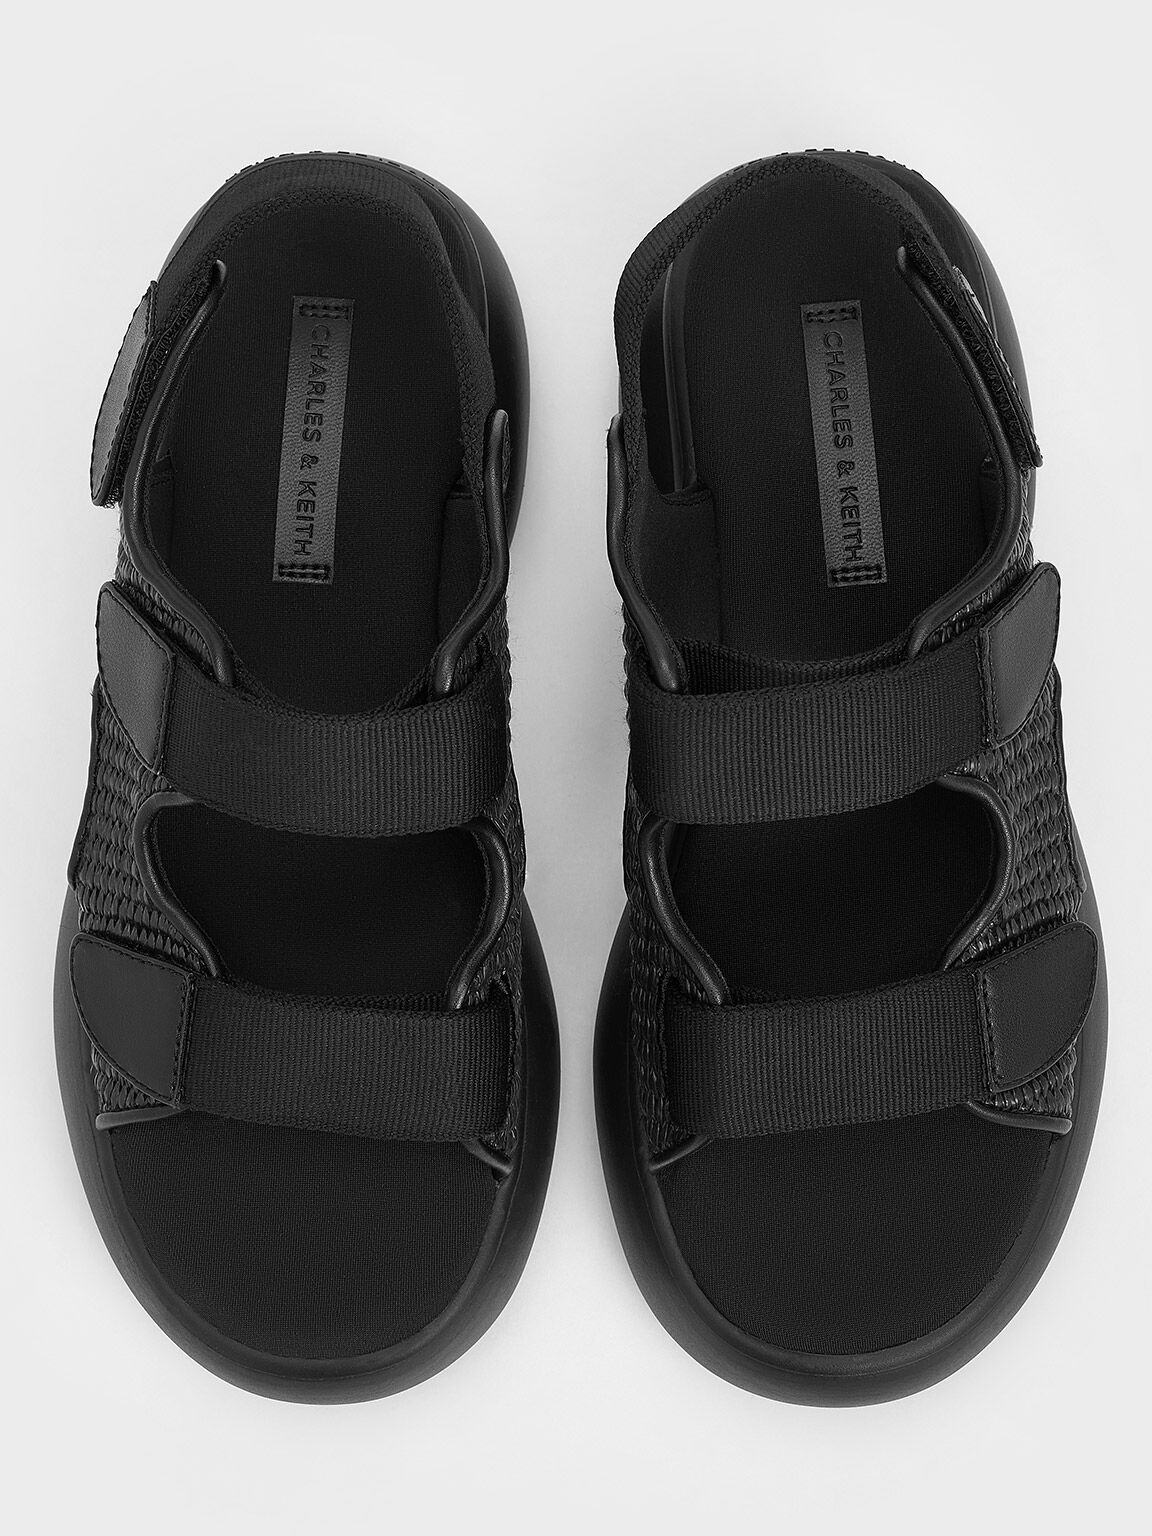 Woven Double-Strap Sports Sandals, Black Textured, hi-res